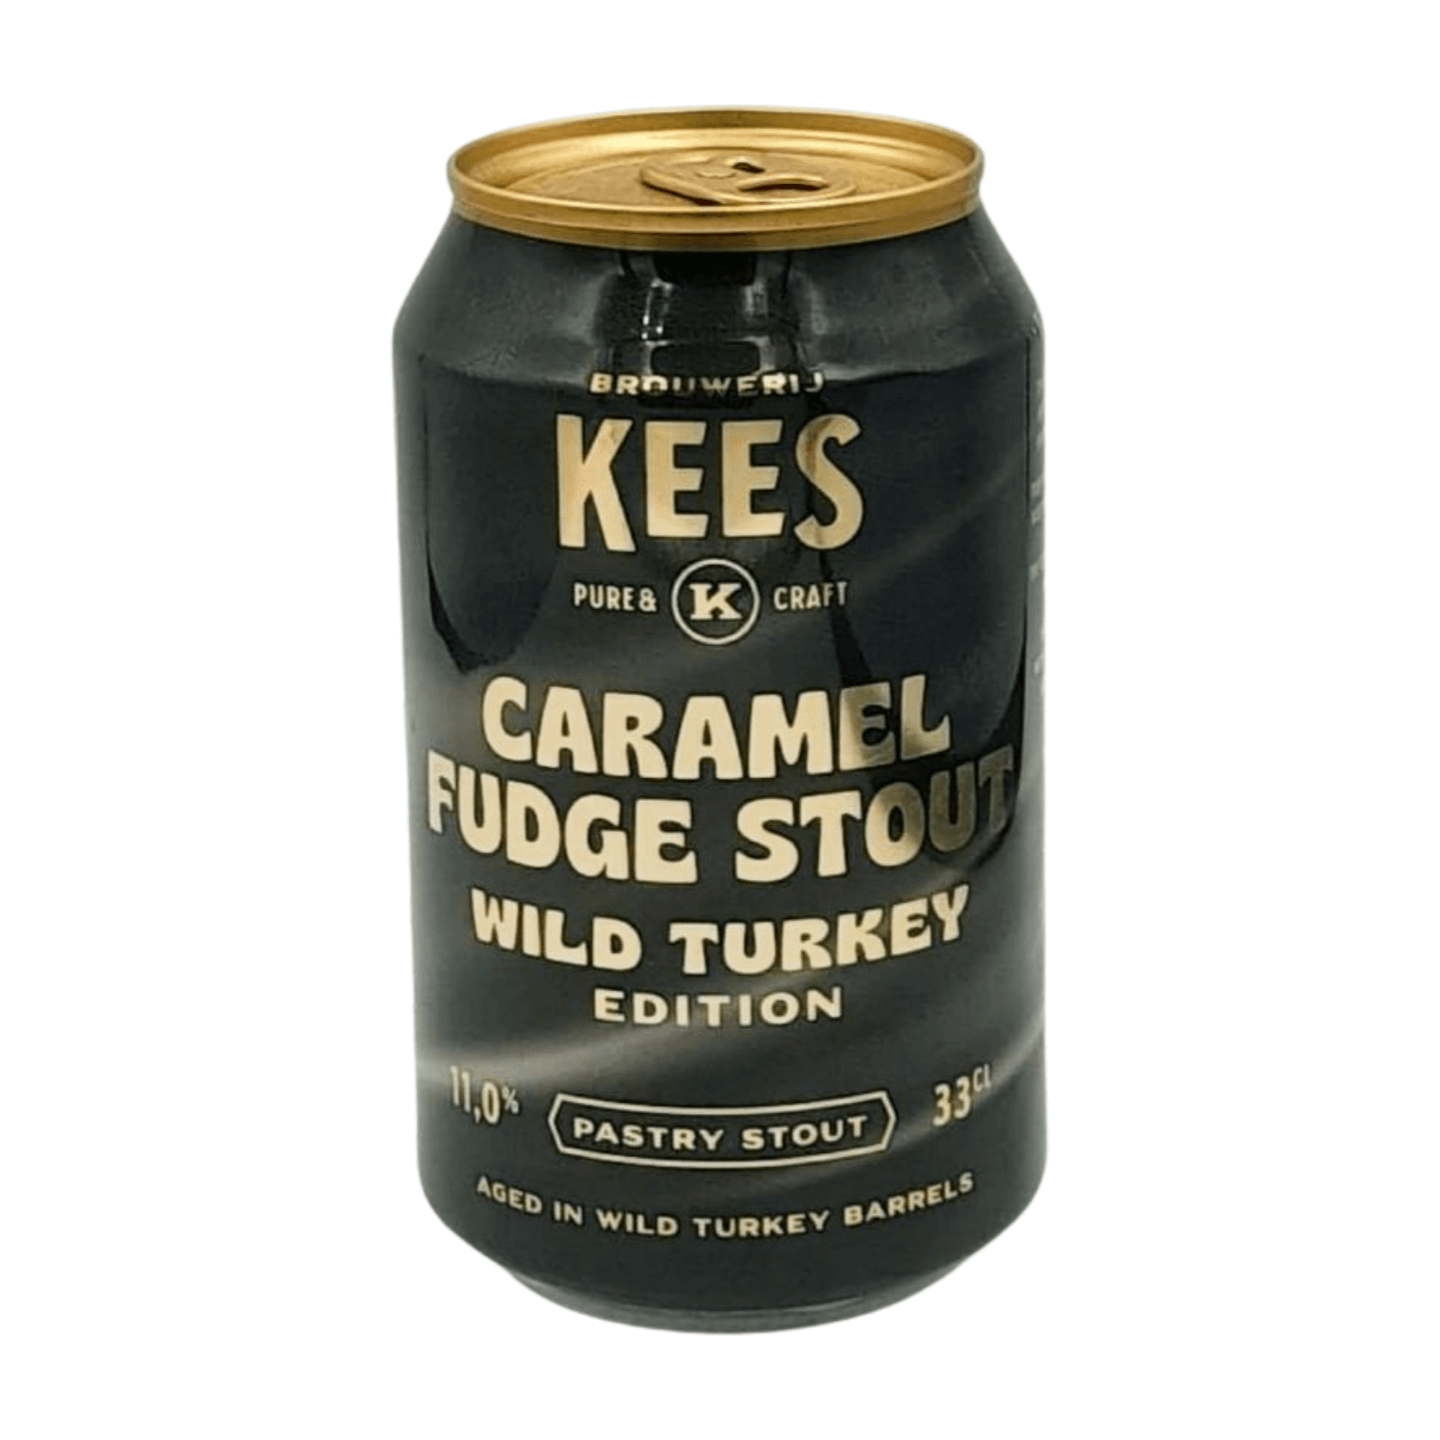 Kees Caramel Fudge Stout Wild Turkey Edition | Wild Turkey BA Pastry Stout Webshop Online Verdins Bierwinkel Rotterdam